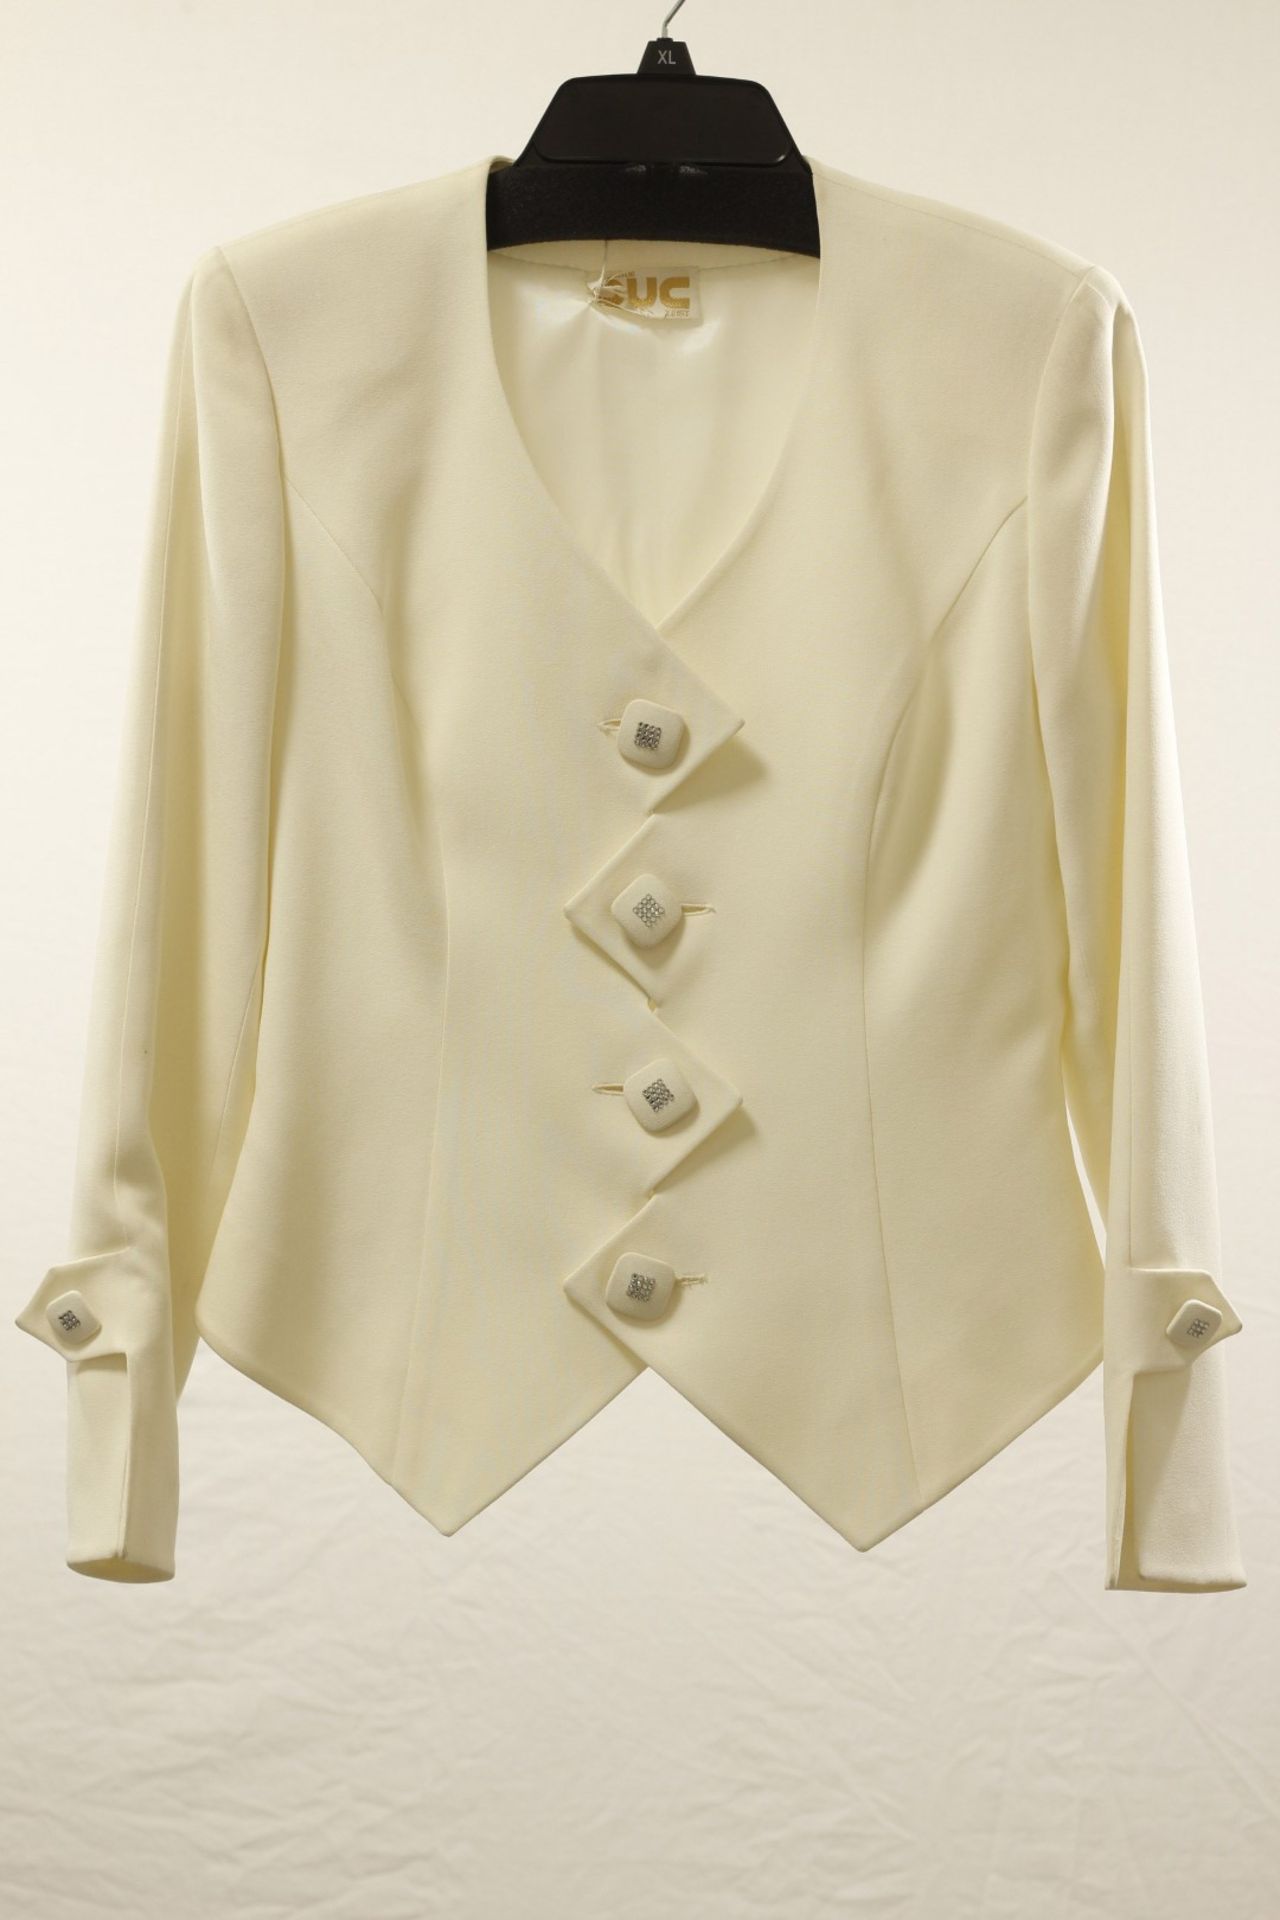 1 x Boutique Le Duc Cream Suit (Jacket And Trousers) - Size: 12 - Material: 82% Acetate, 18% Viscose